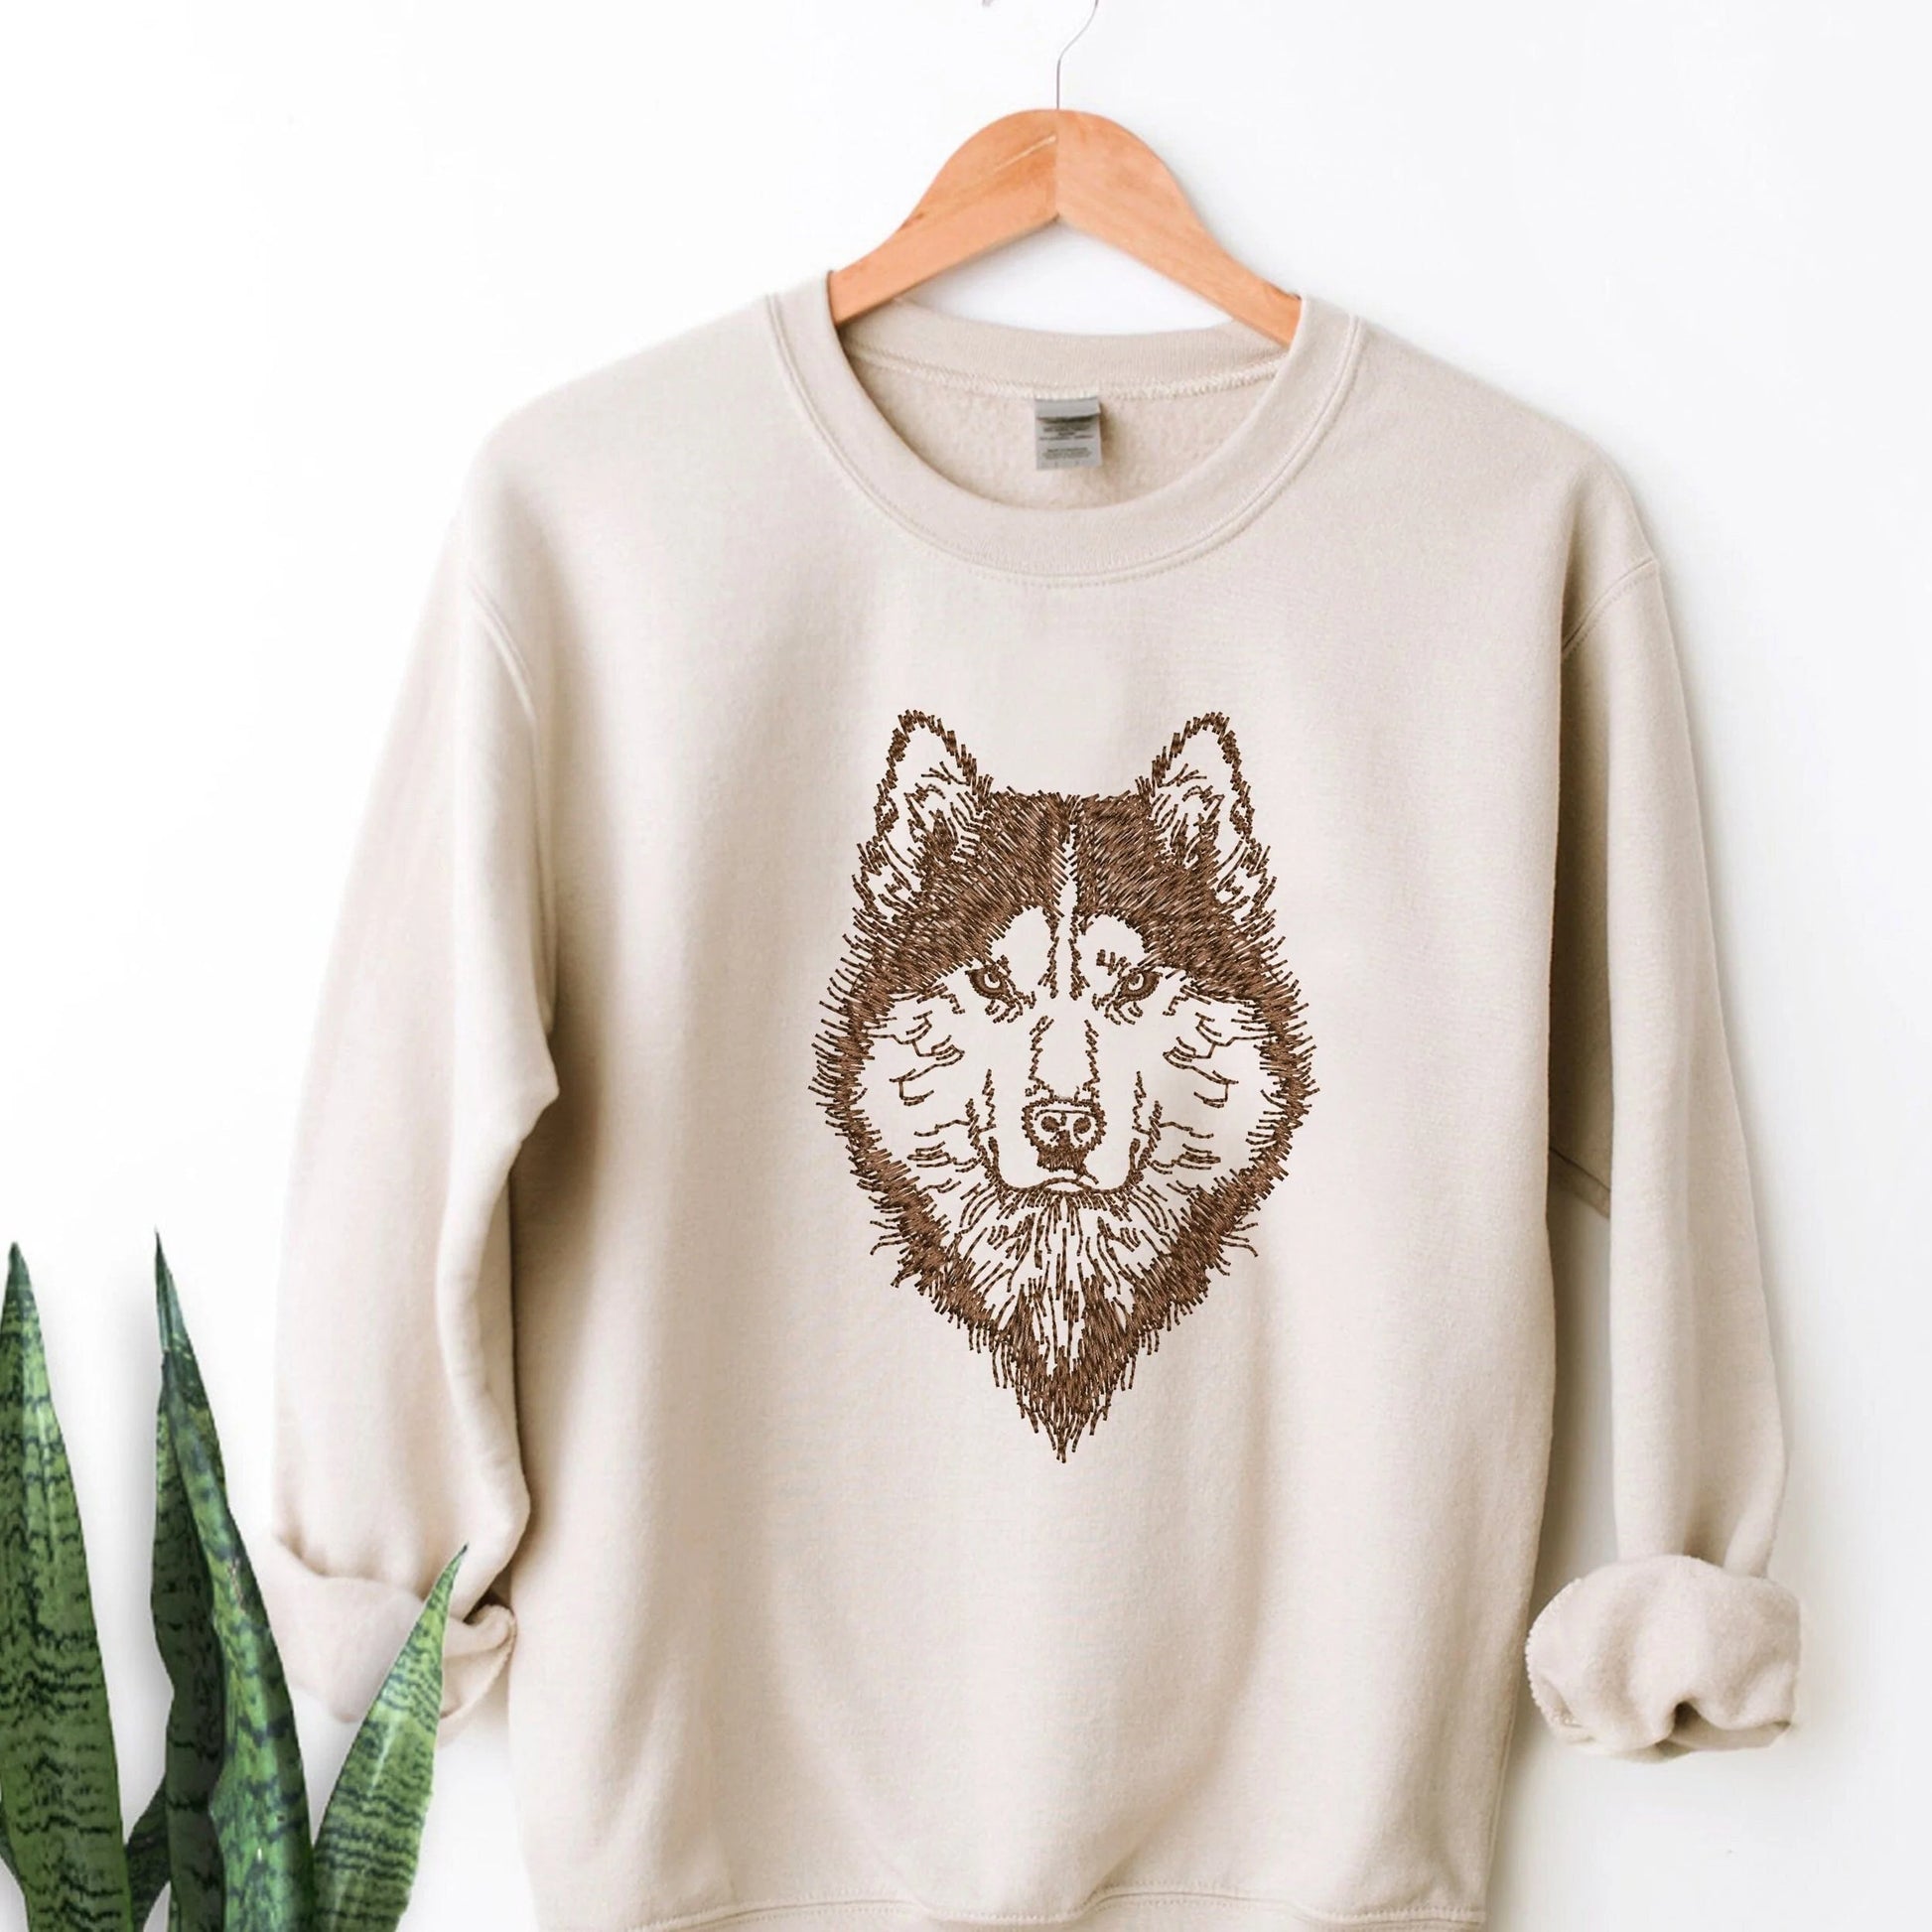 Husky Dog Machine Embroidery Design on t-shirt